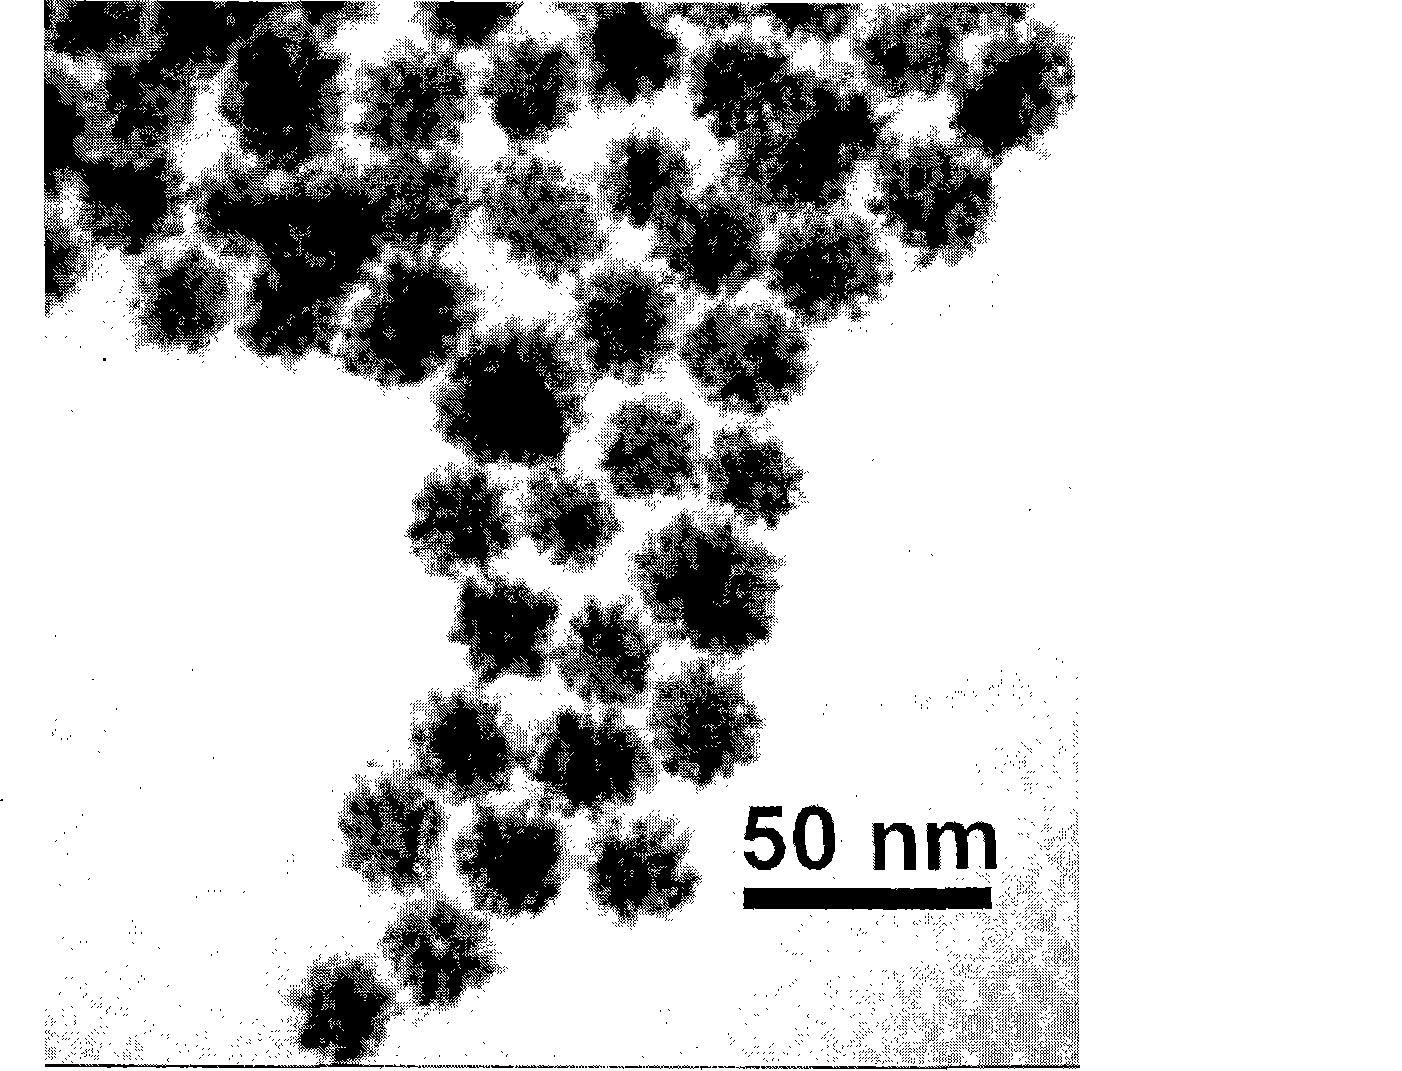 Method for preparing monodisperse flower-shaped gold/platinum hybrid nano particles having different particle diameters